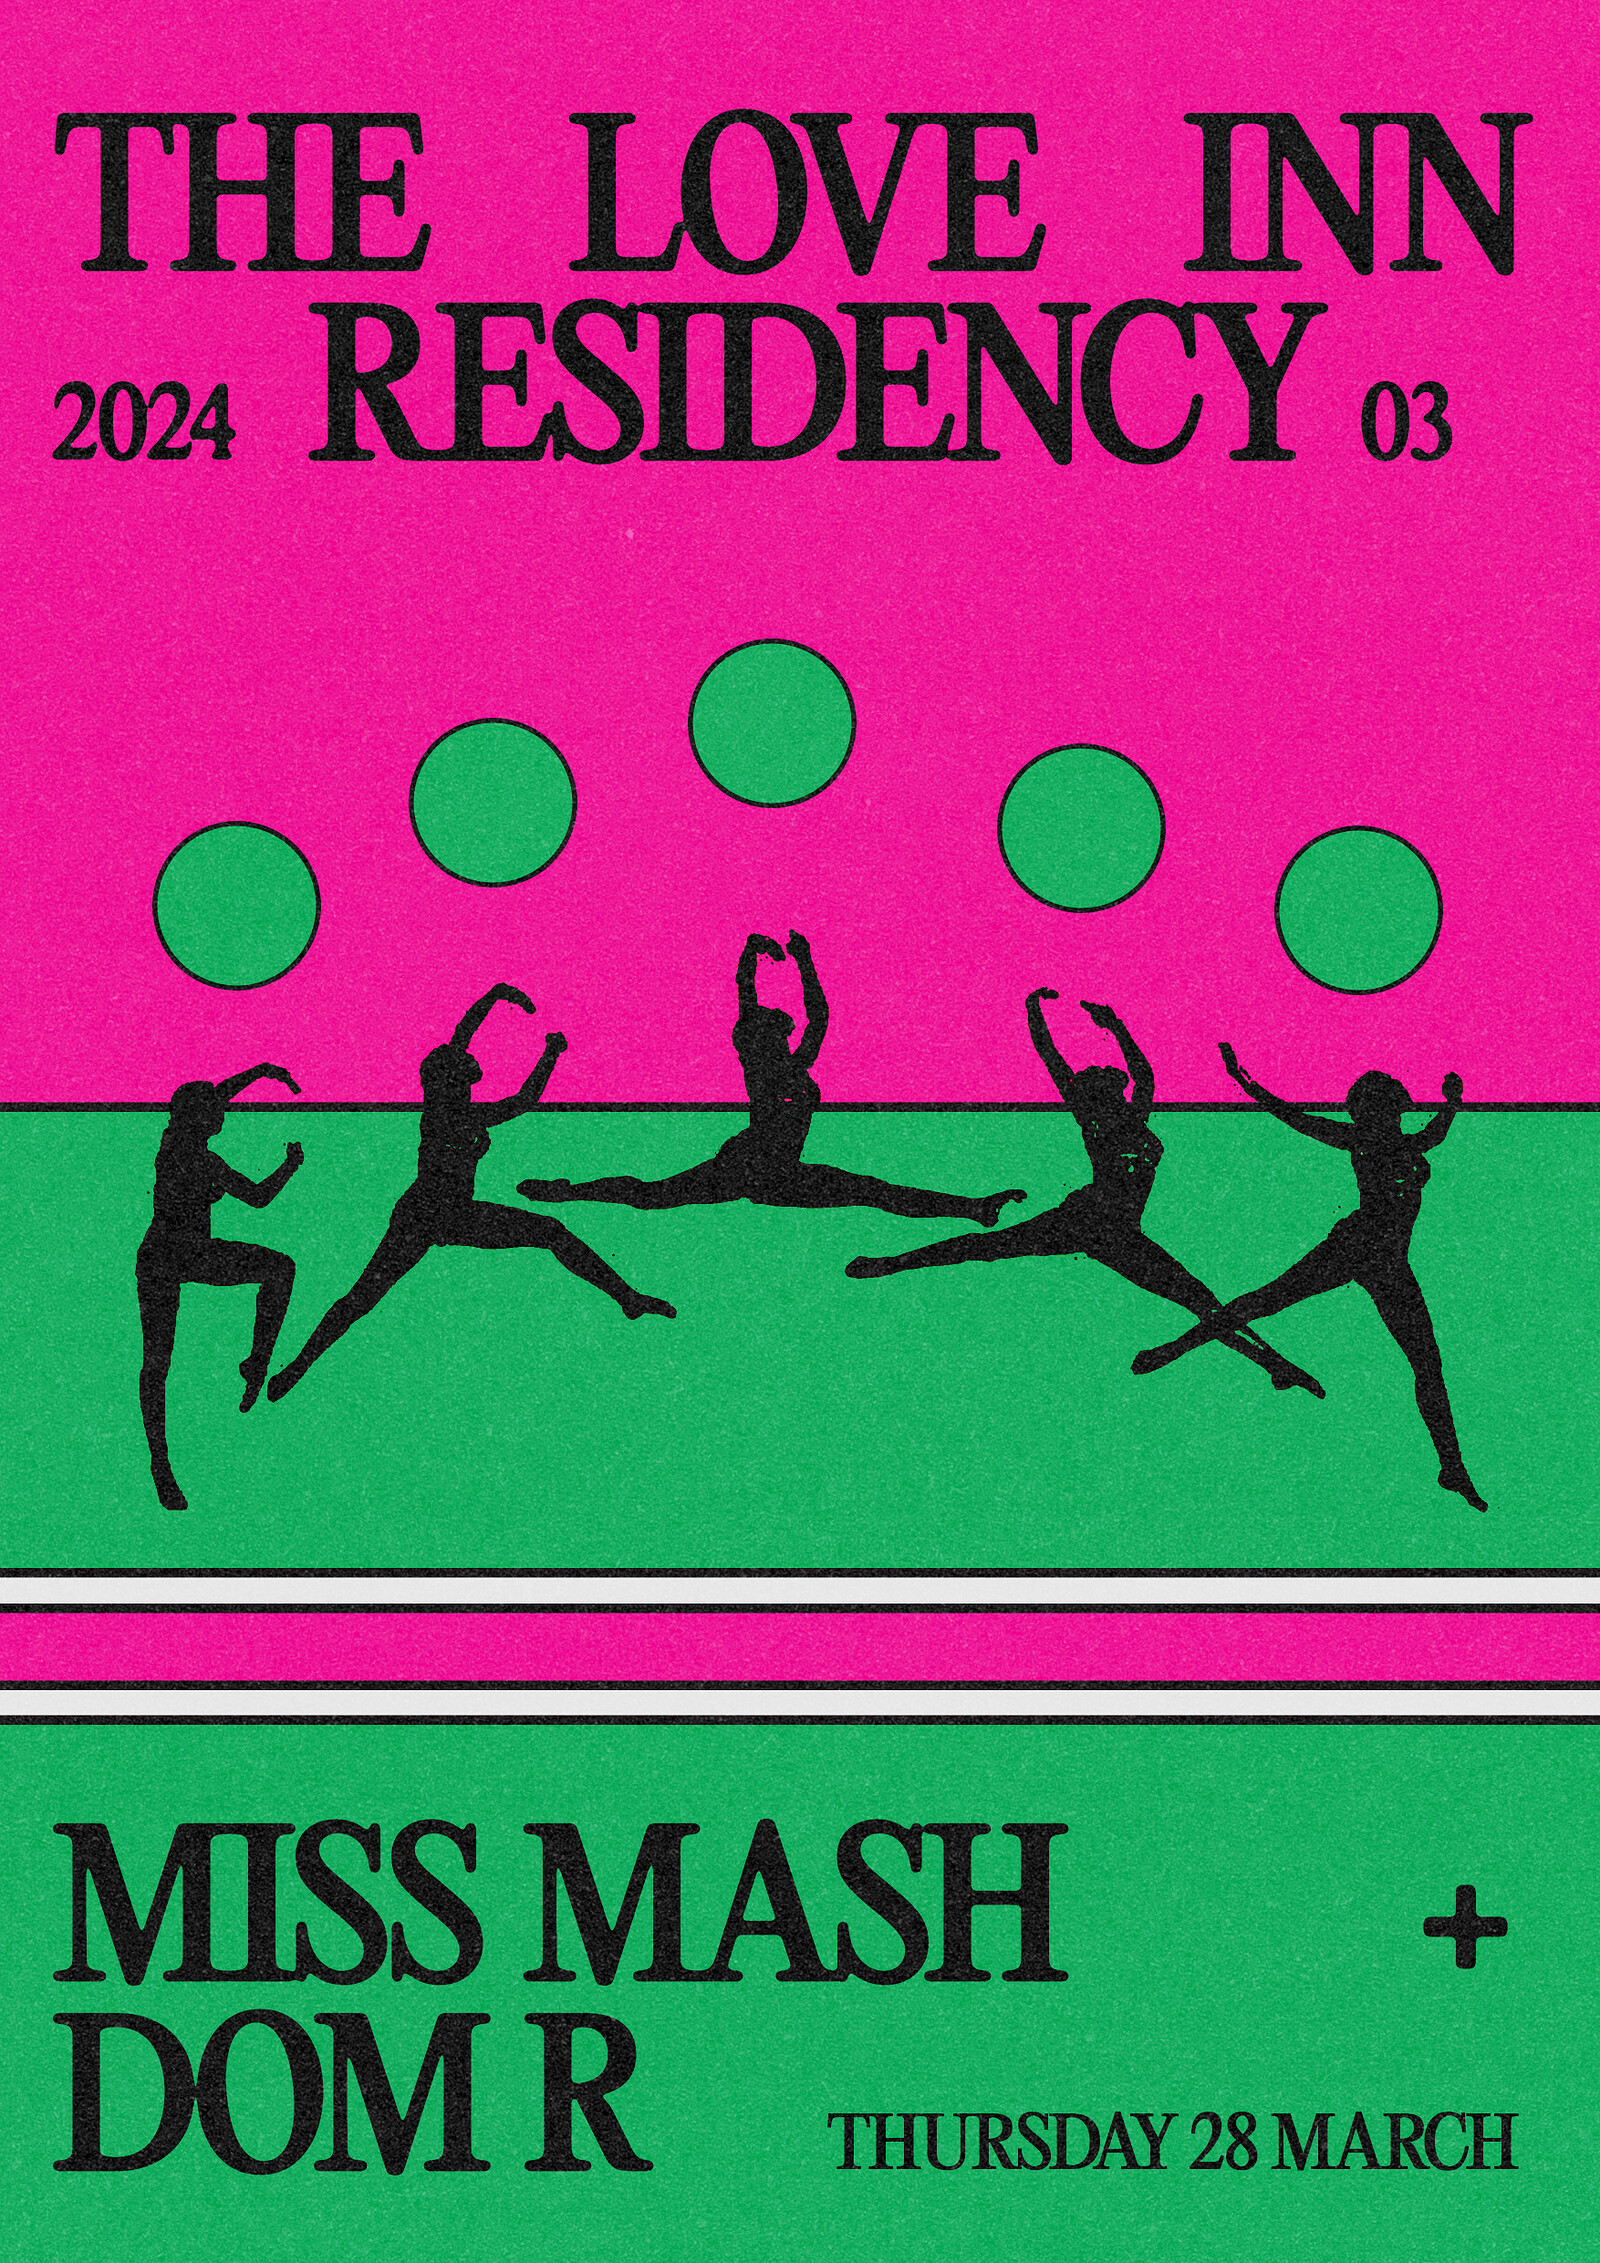 Miss Mash + Dom R RESIDENCY #03 at The Love Inn